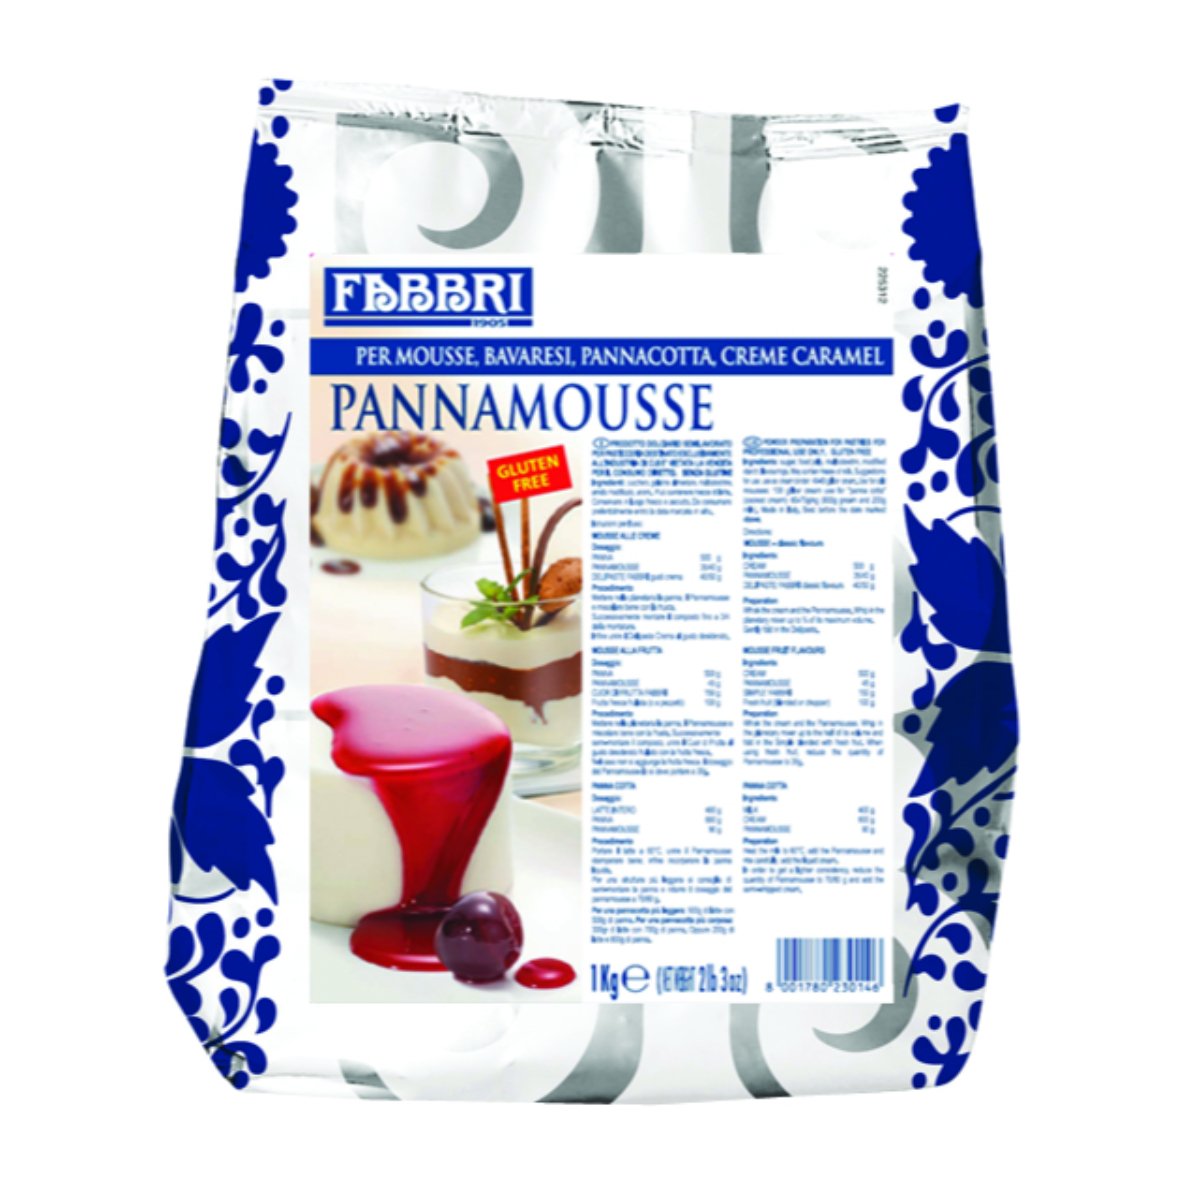 Fabbri Pannamousse - Bake Supply Plus